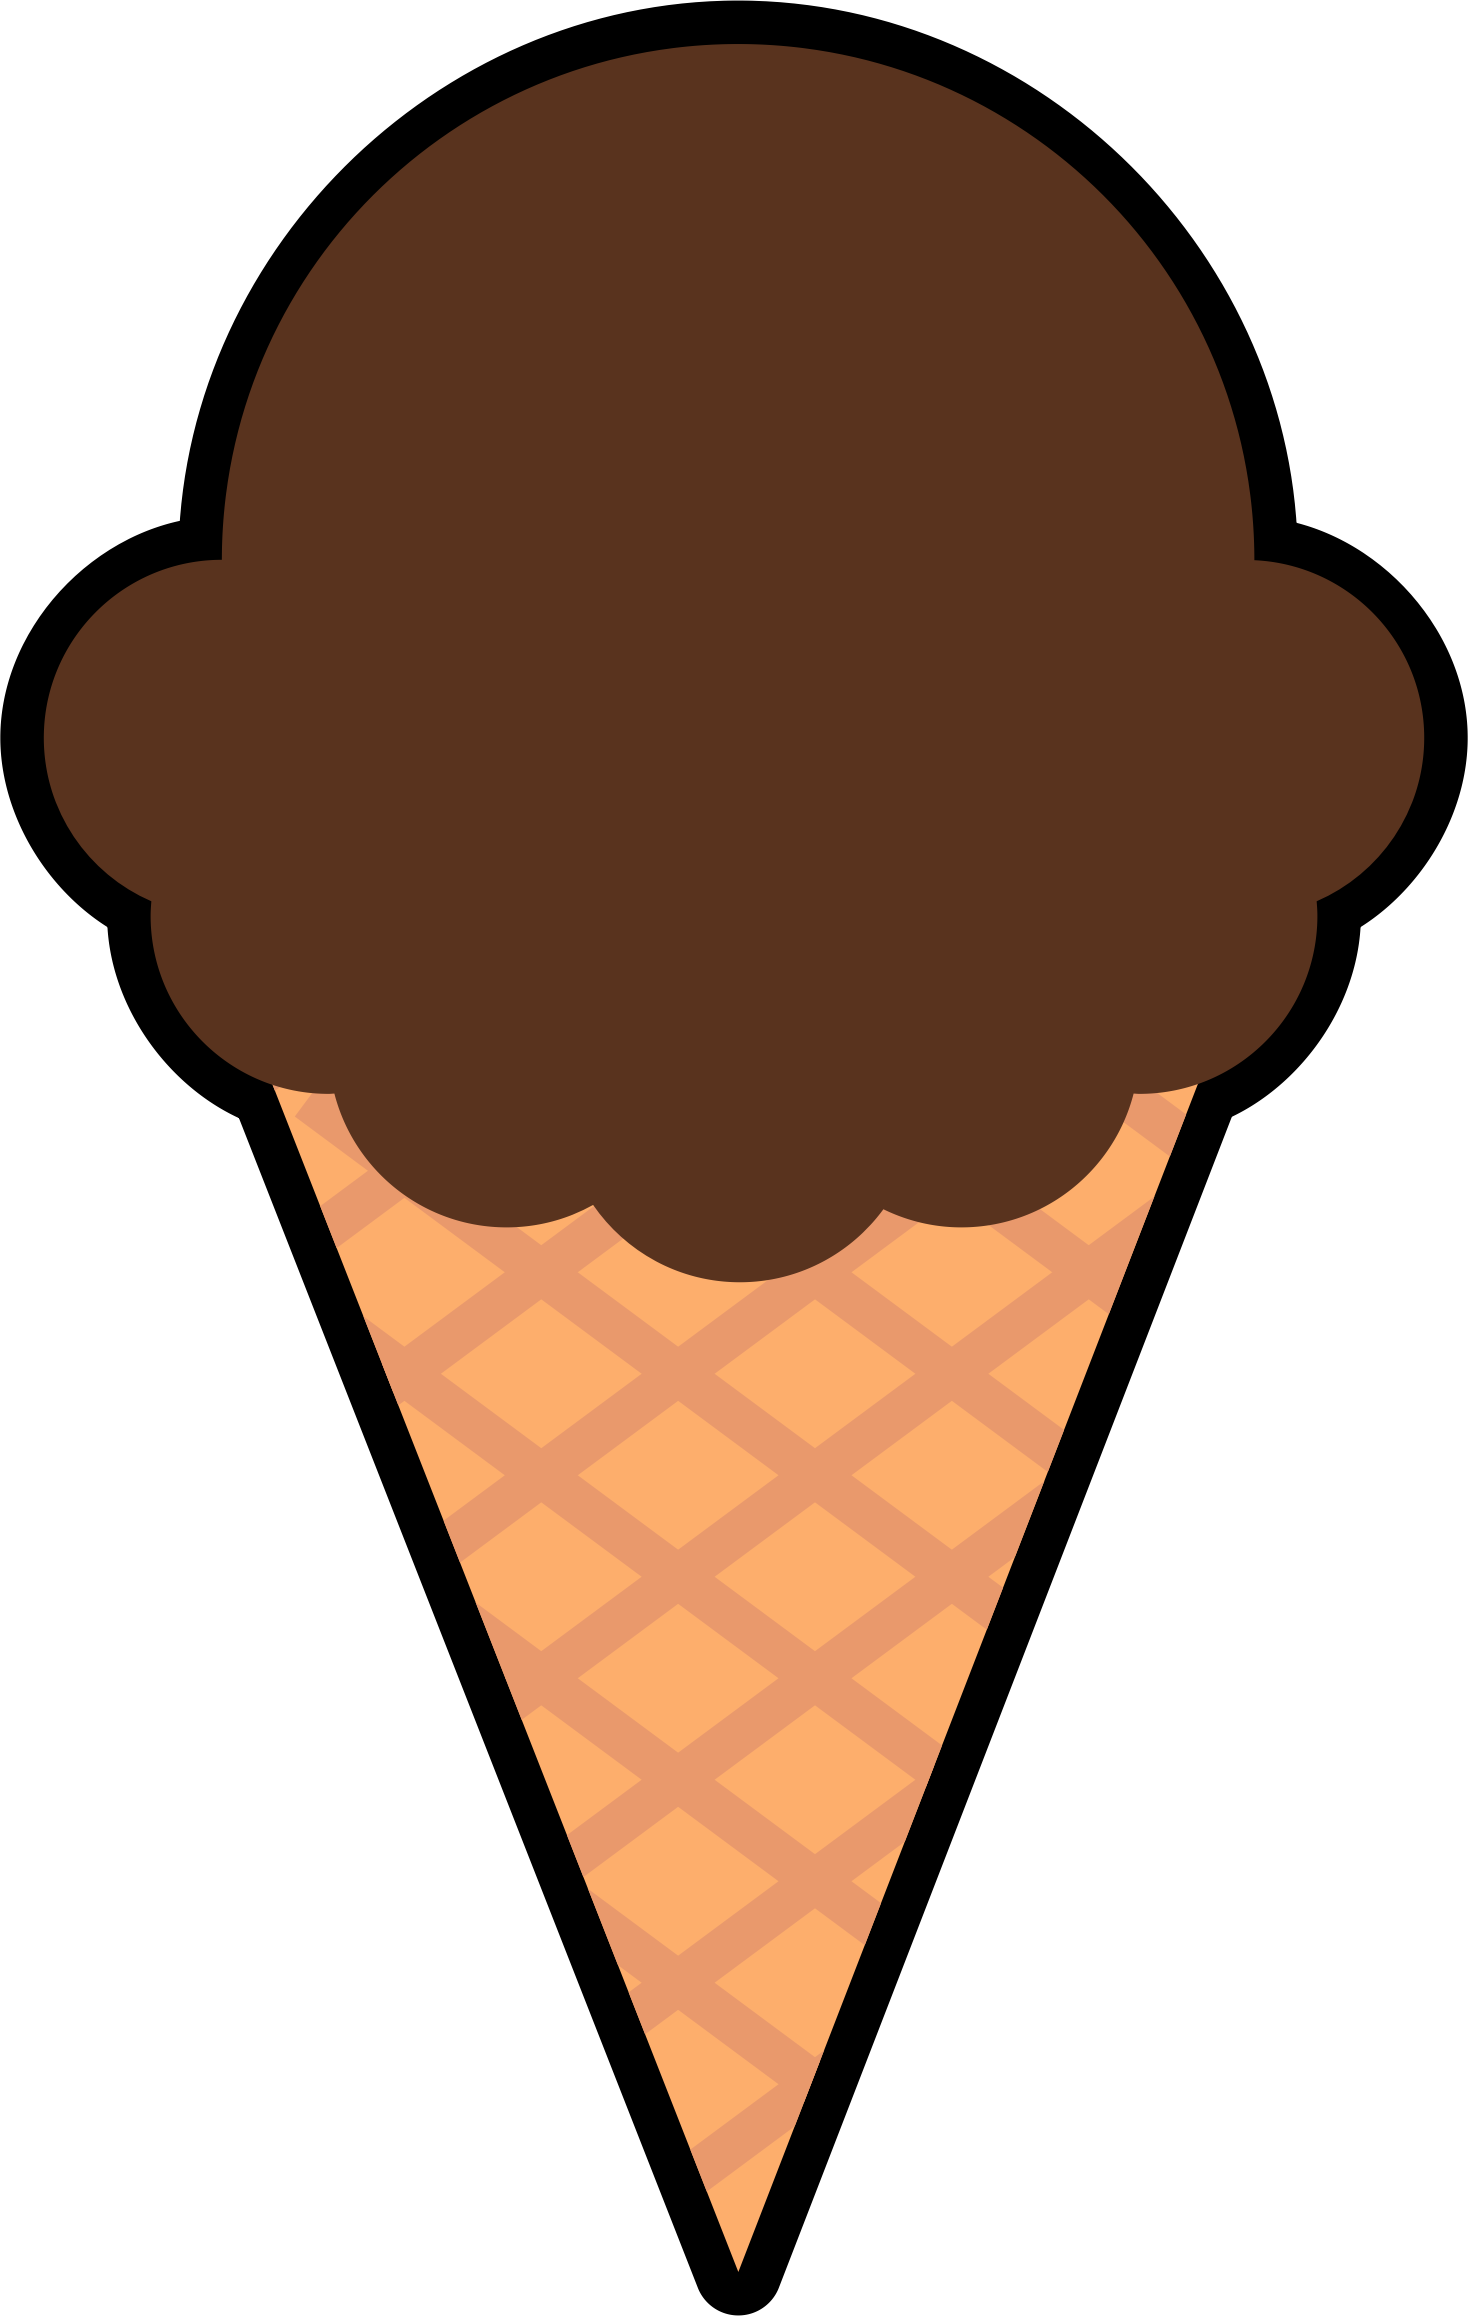 Chocolate Ice Cream Cone Png Clipart Picture\u200b - Chocolate Ice Cream Cone Clip Art (1468x2316), Png Download